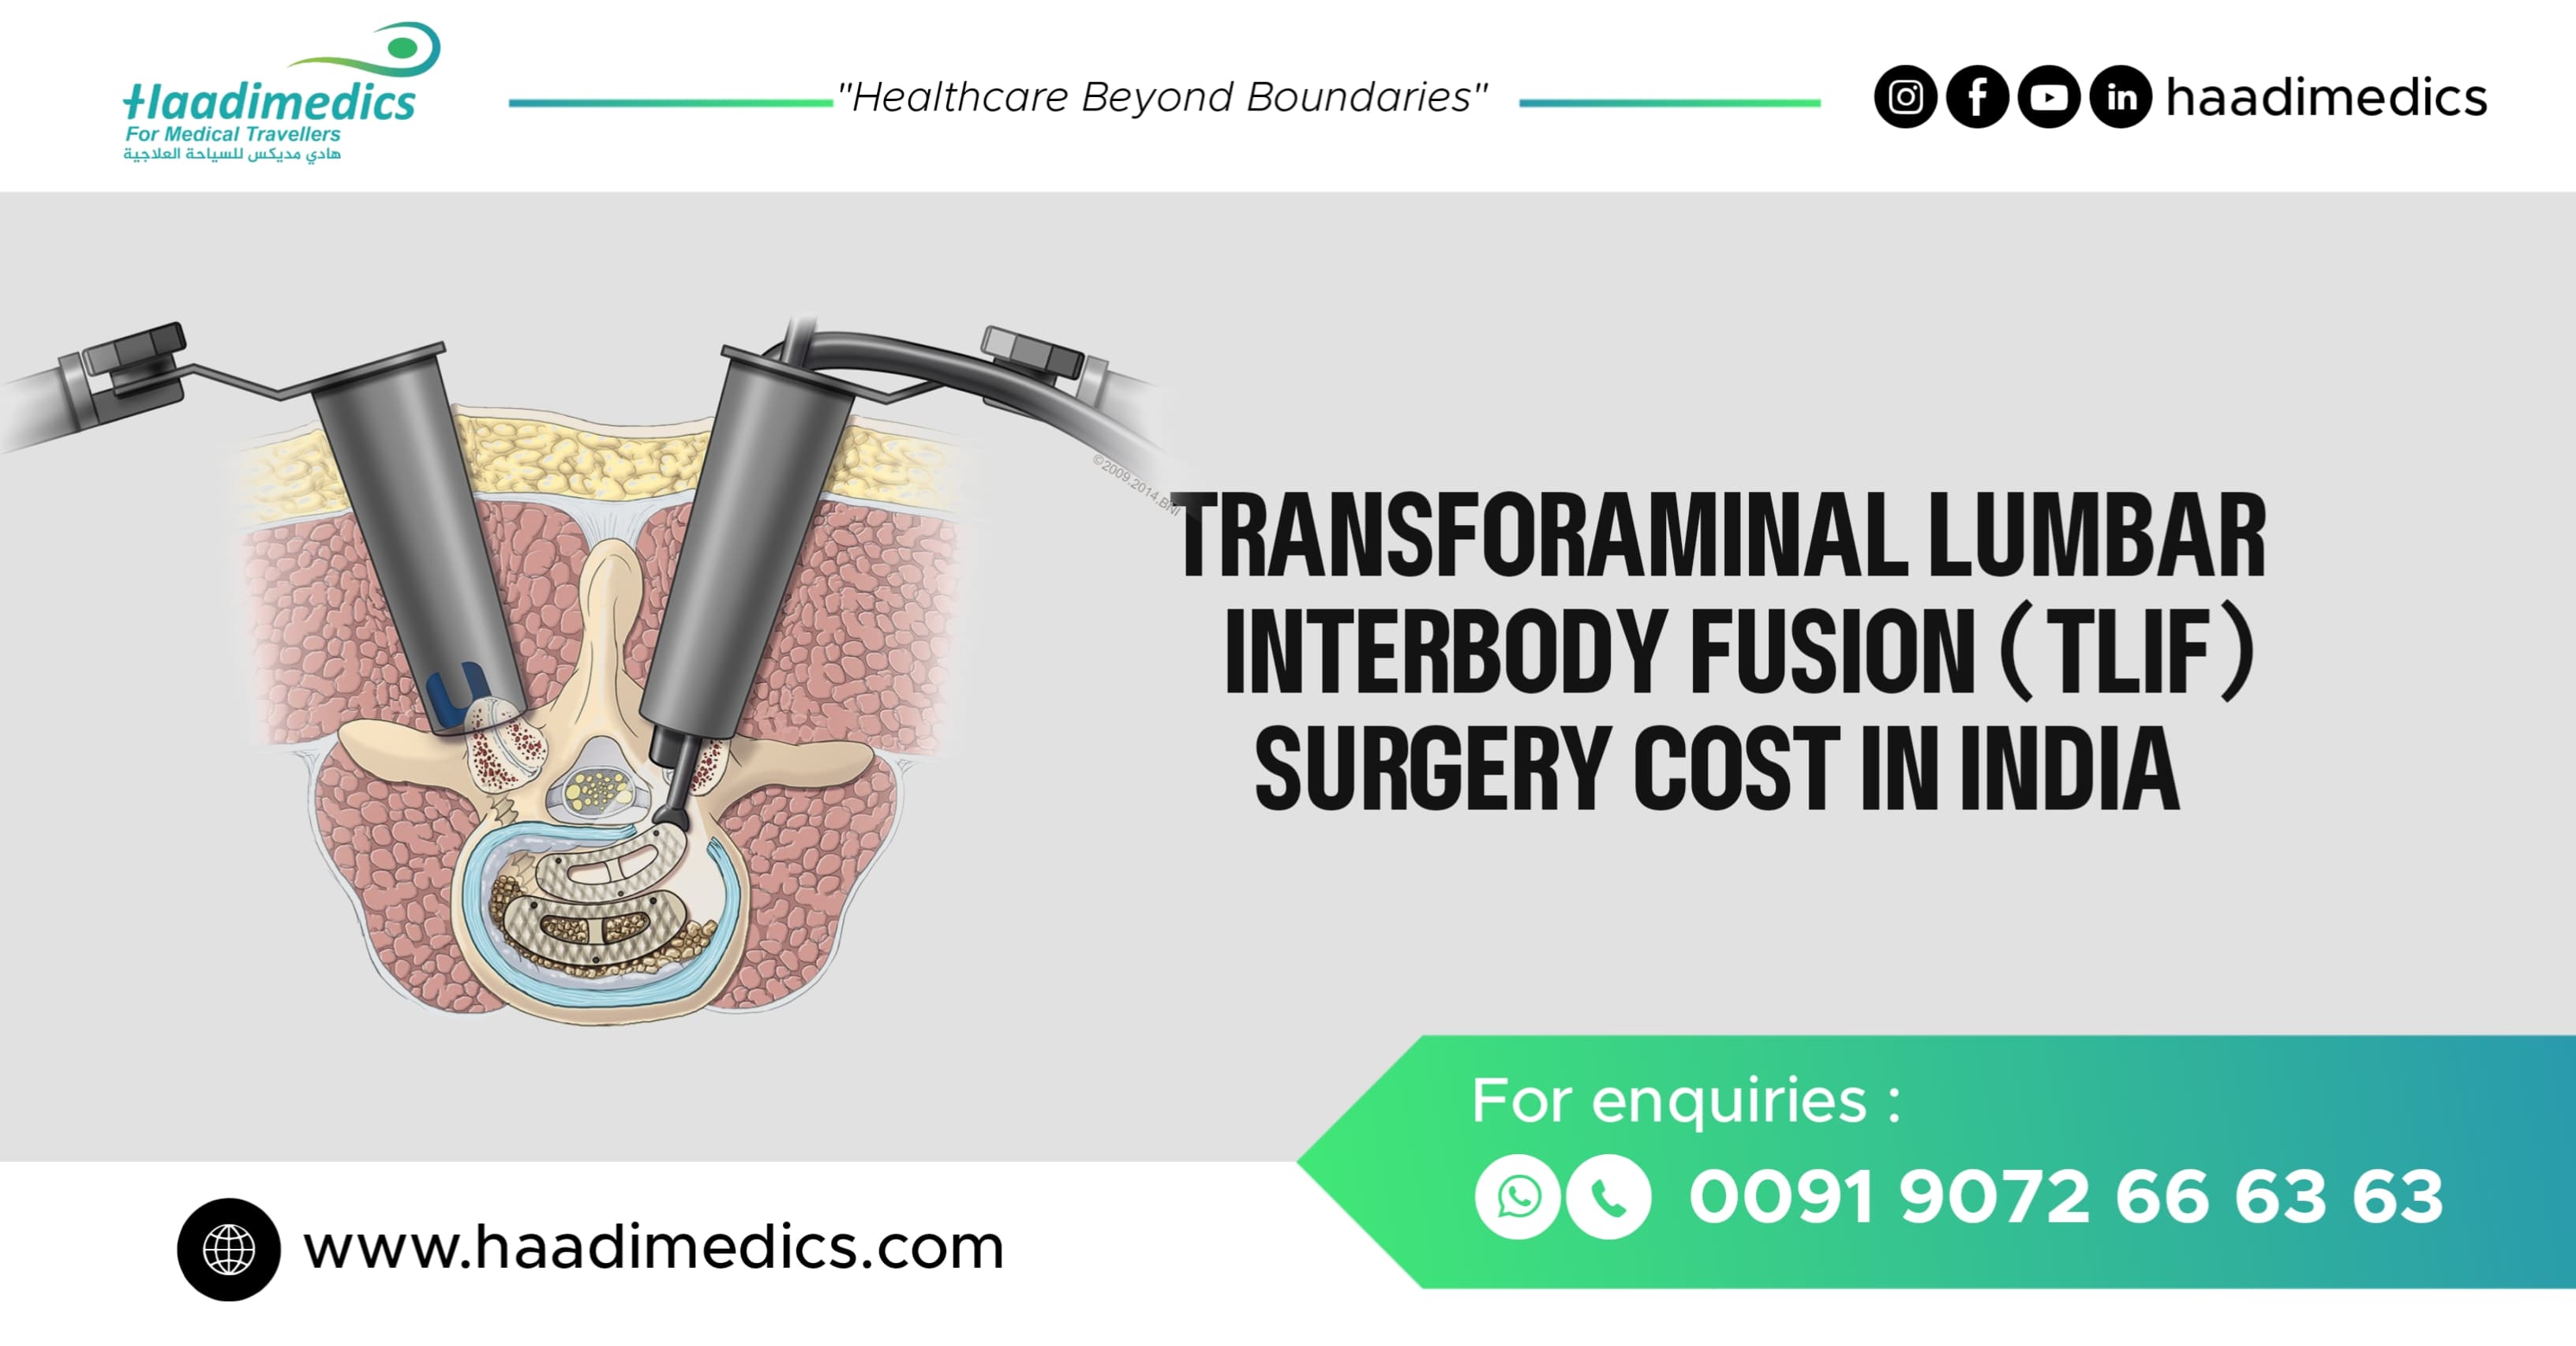 Transforaminal Lumbar Interbody Fusion ‘TLIF’ Surgery Cost in India